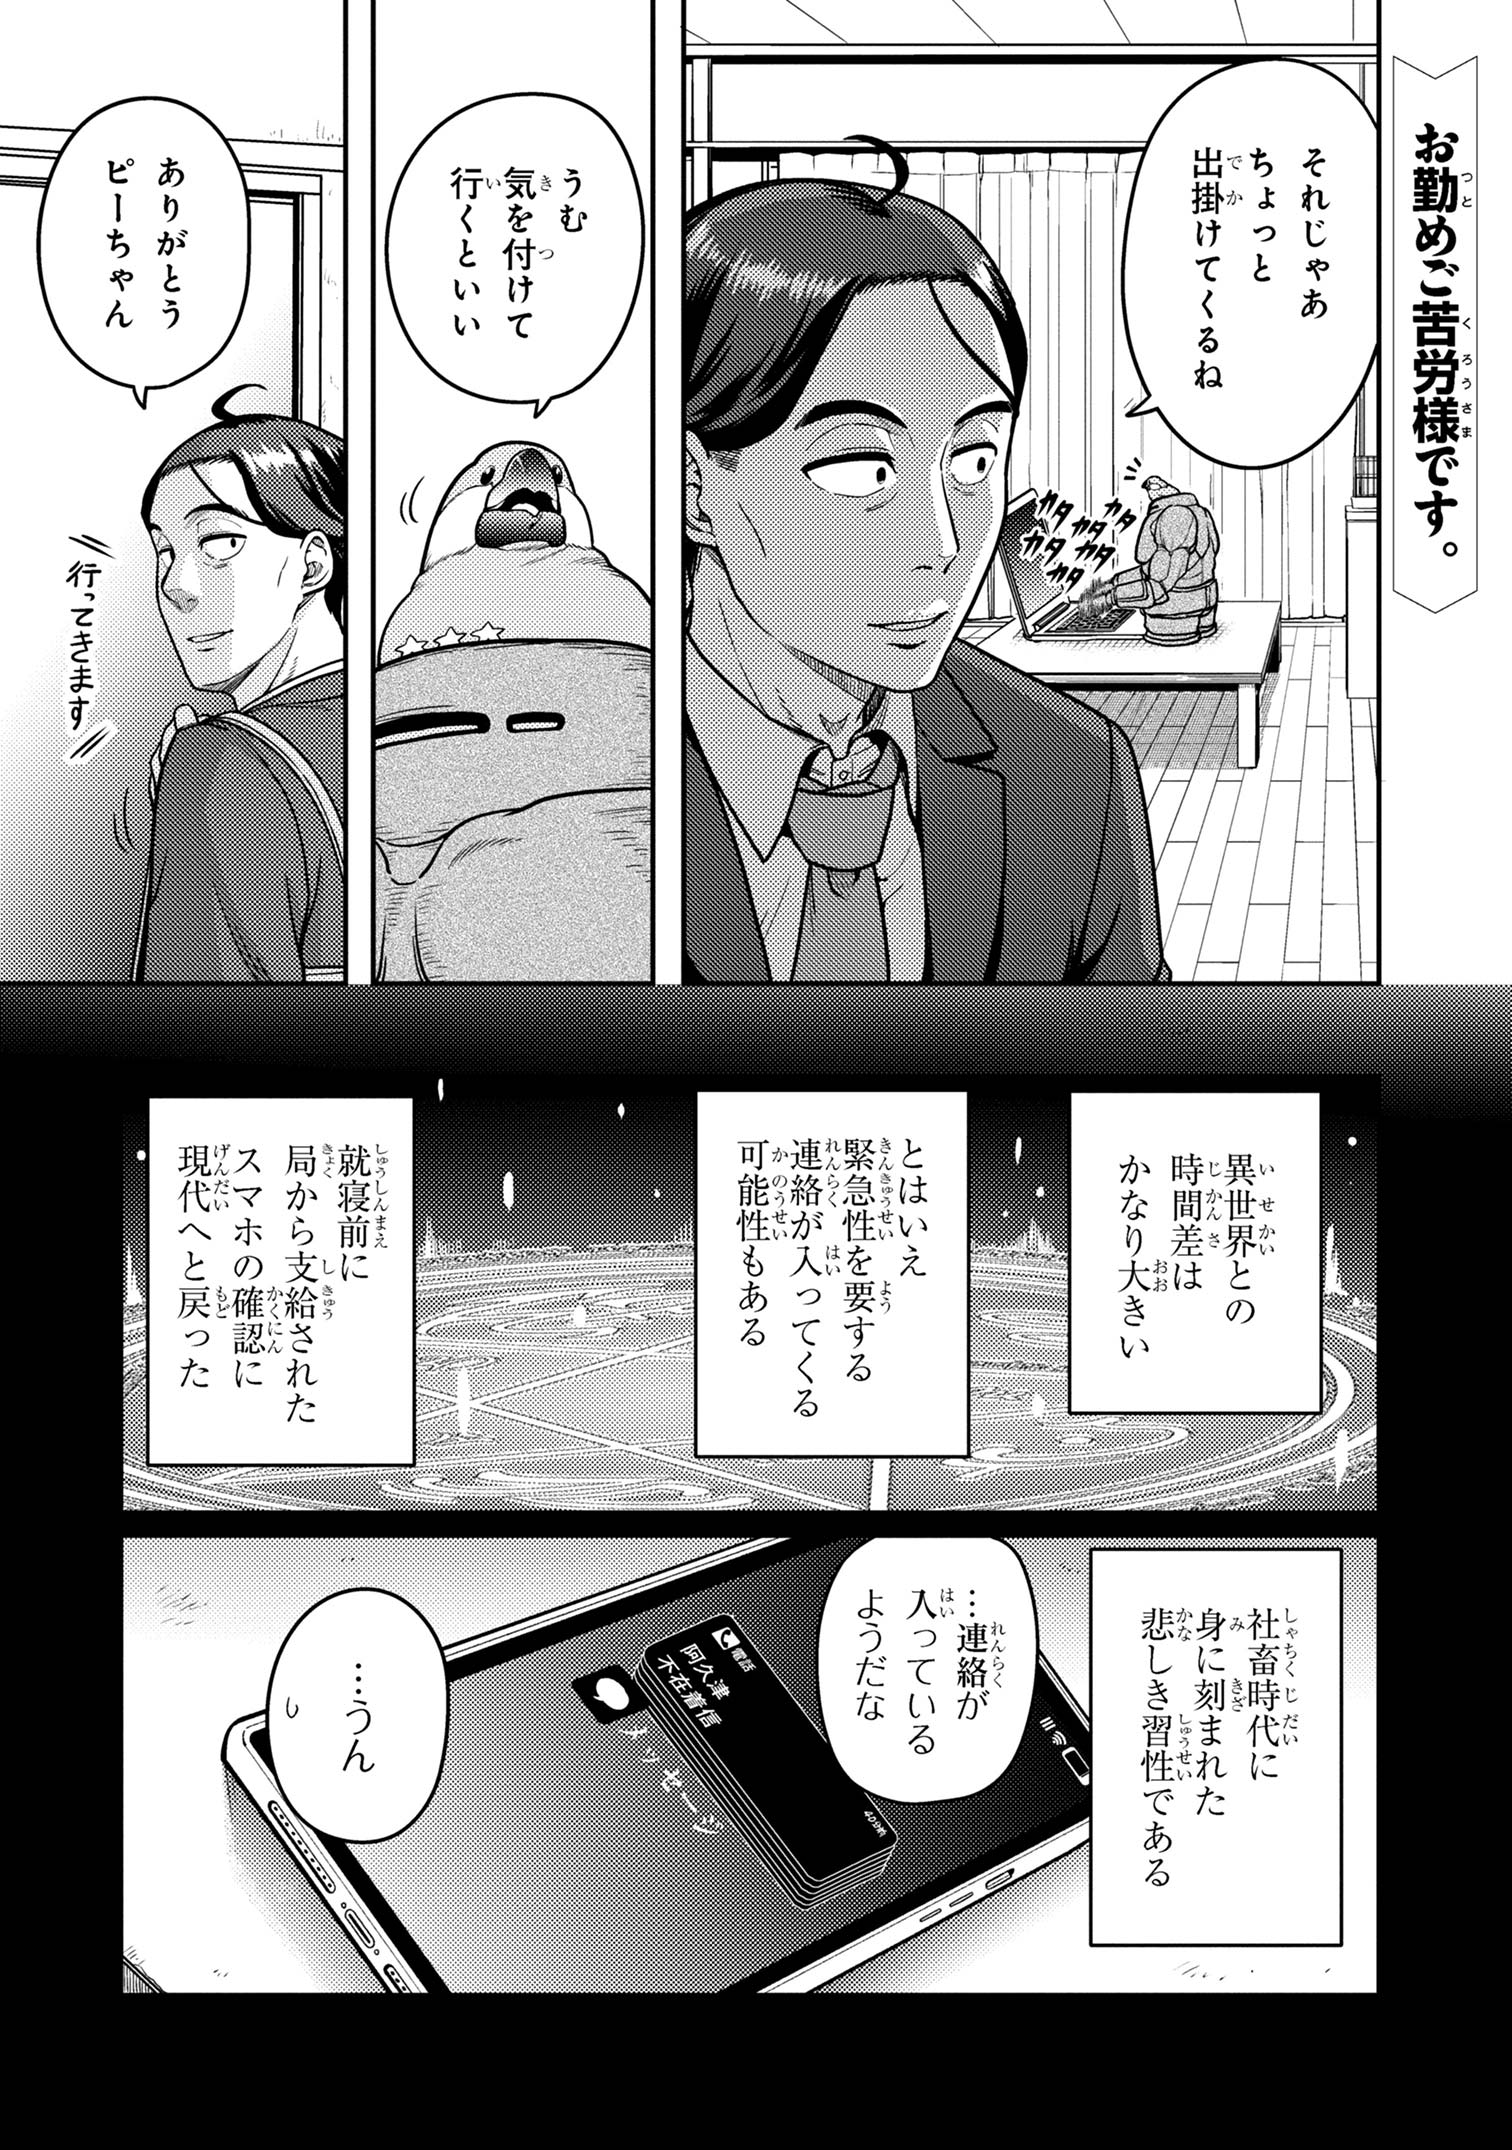 Sasaki to Pii-chan - Chapter 17.1 - Page 1